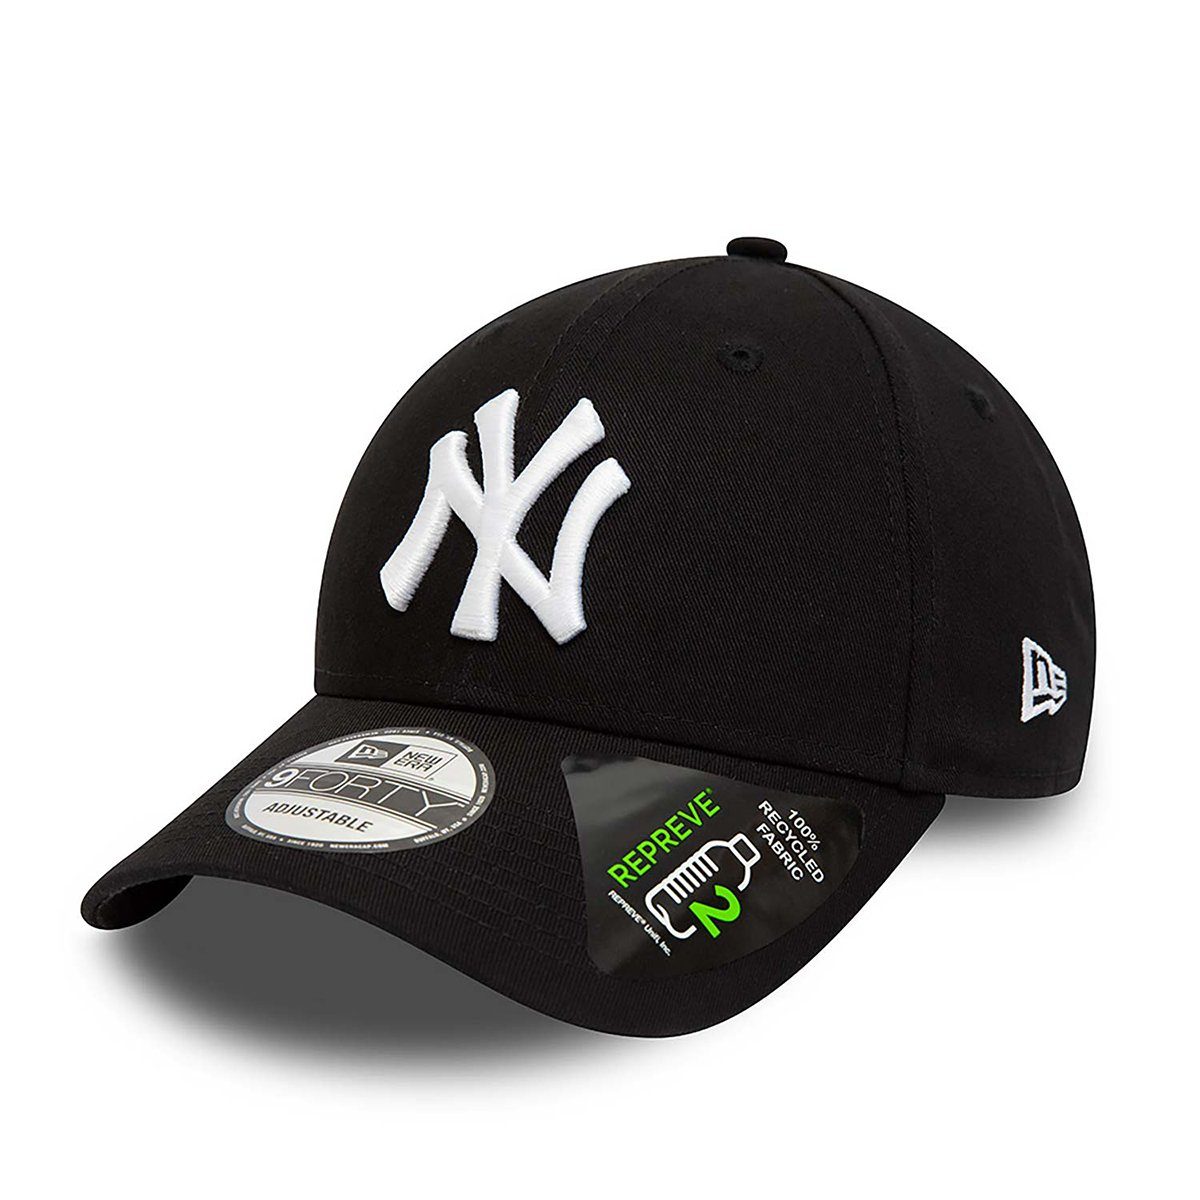 New New Cap York Baseball Era Repreve Yankees